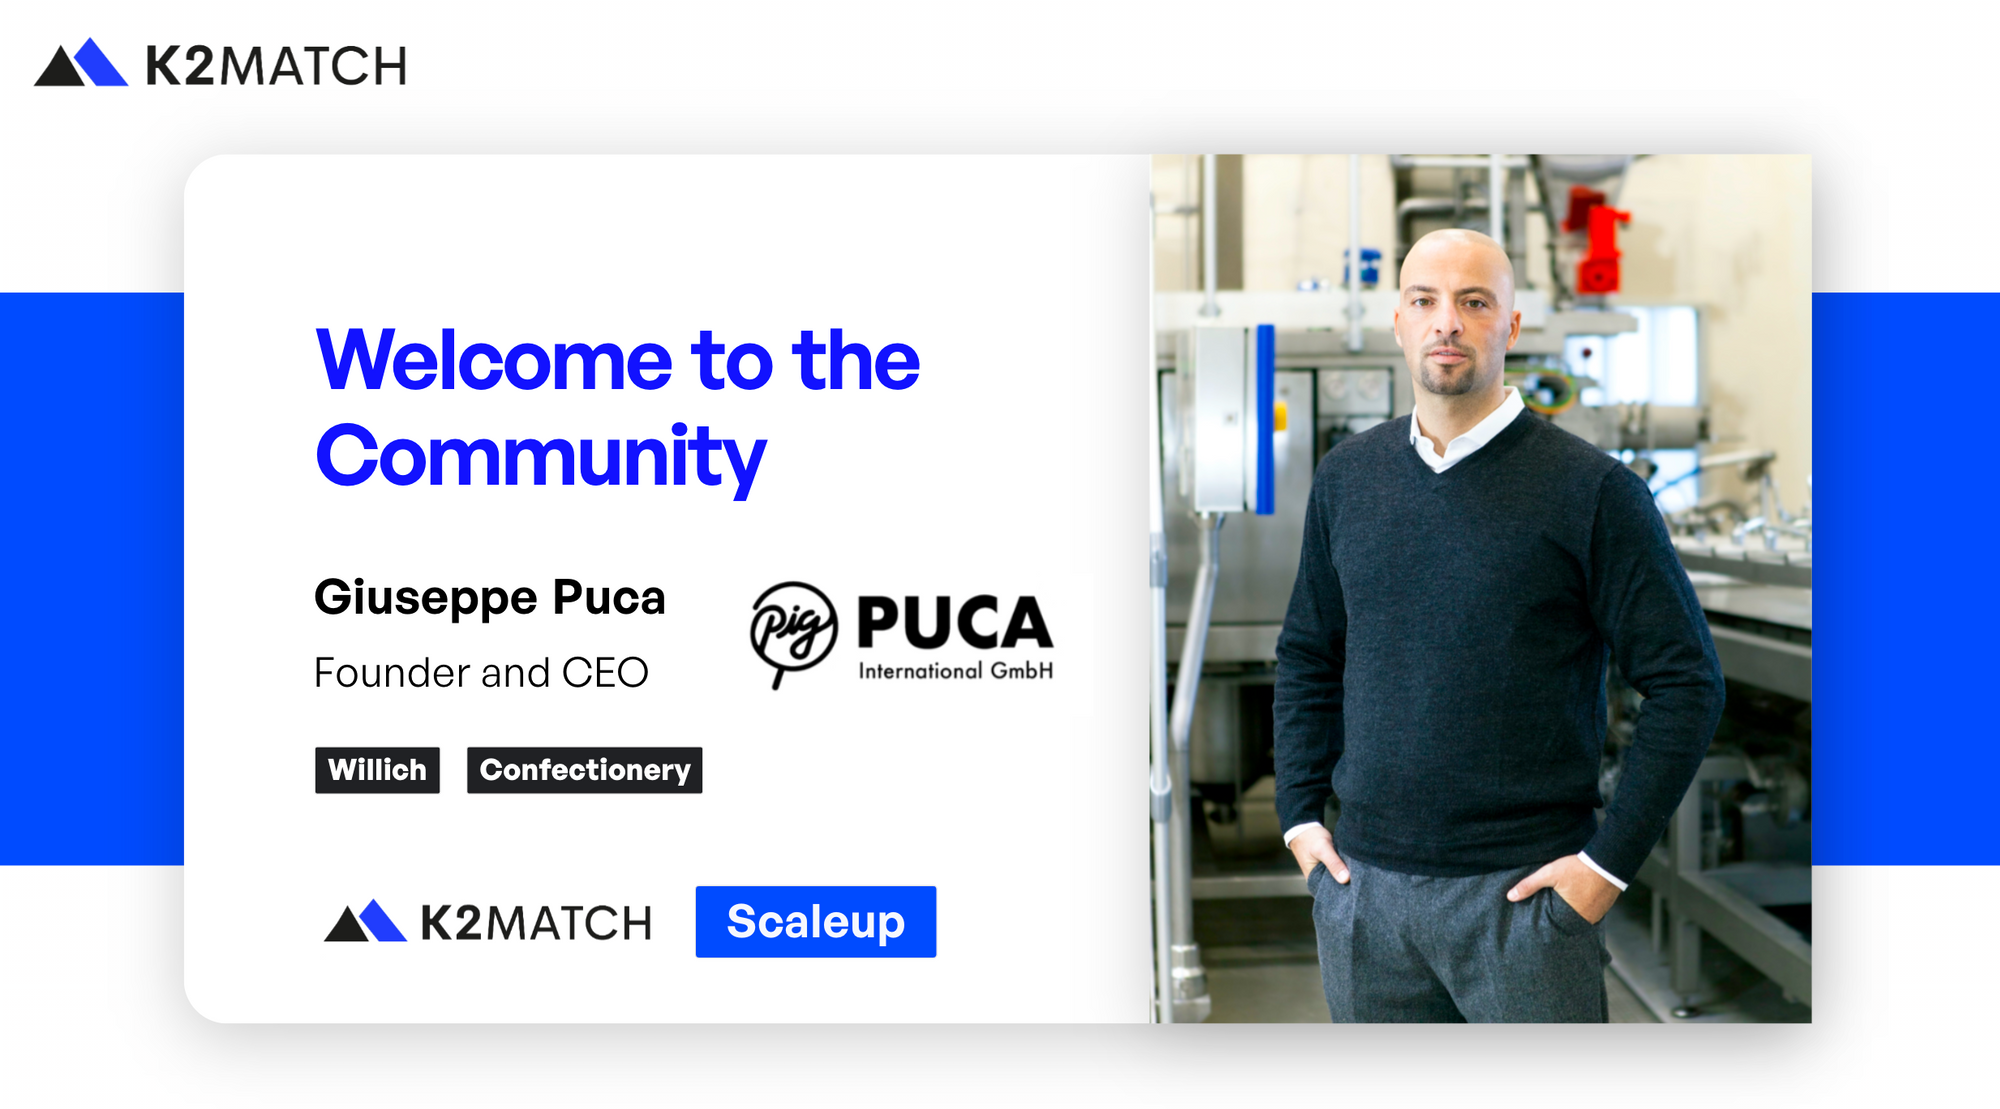 K2MATCH Community Member, Giuseppe Puca , CEO of Puca International GmbH